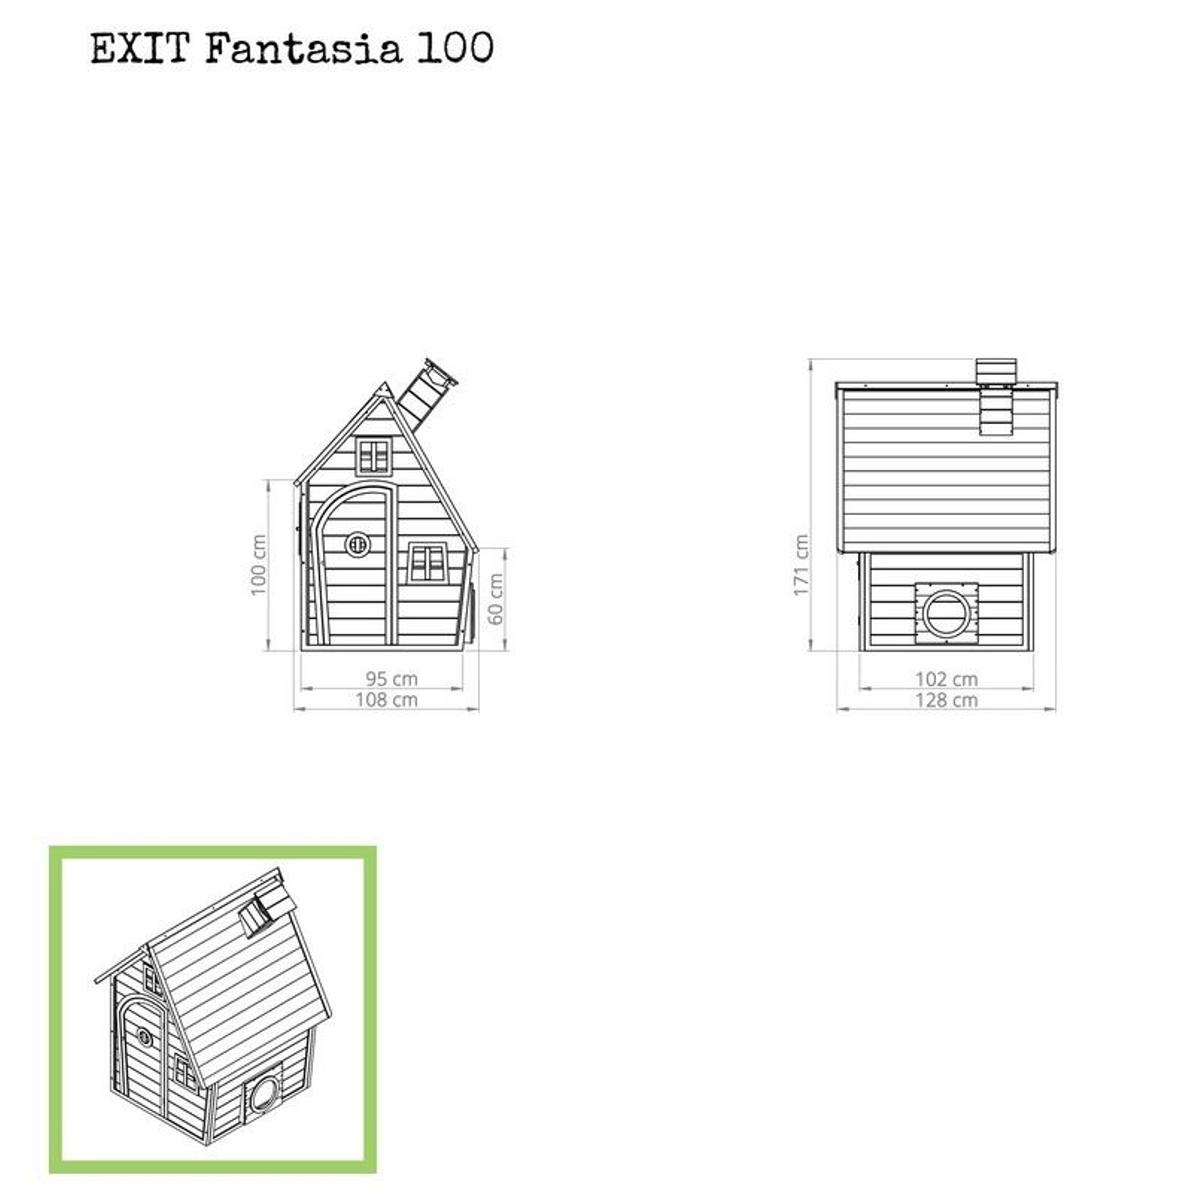 EXIT Fantasia 100 Houten Speelhuis - Naturel